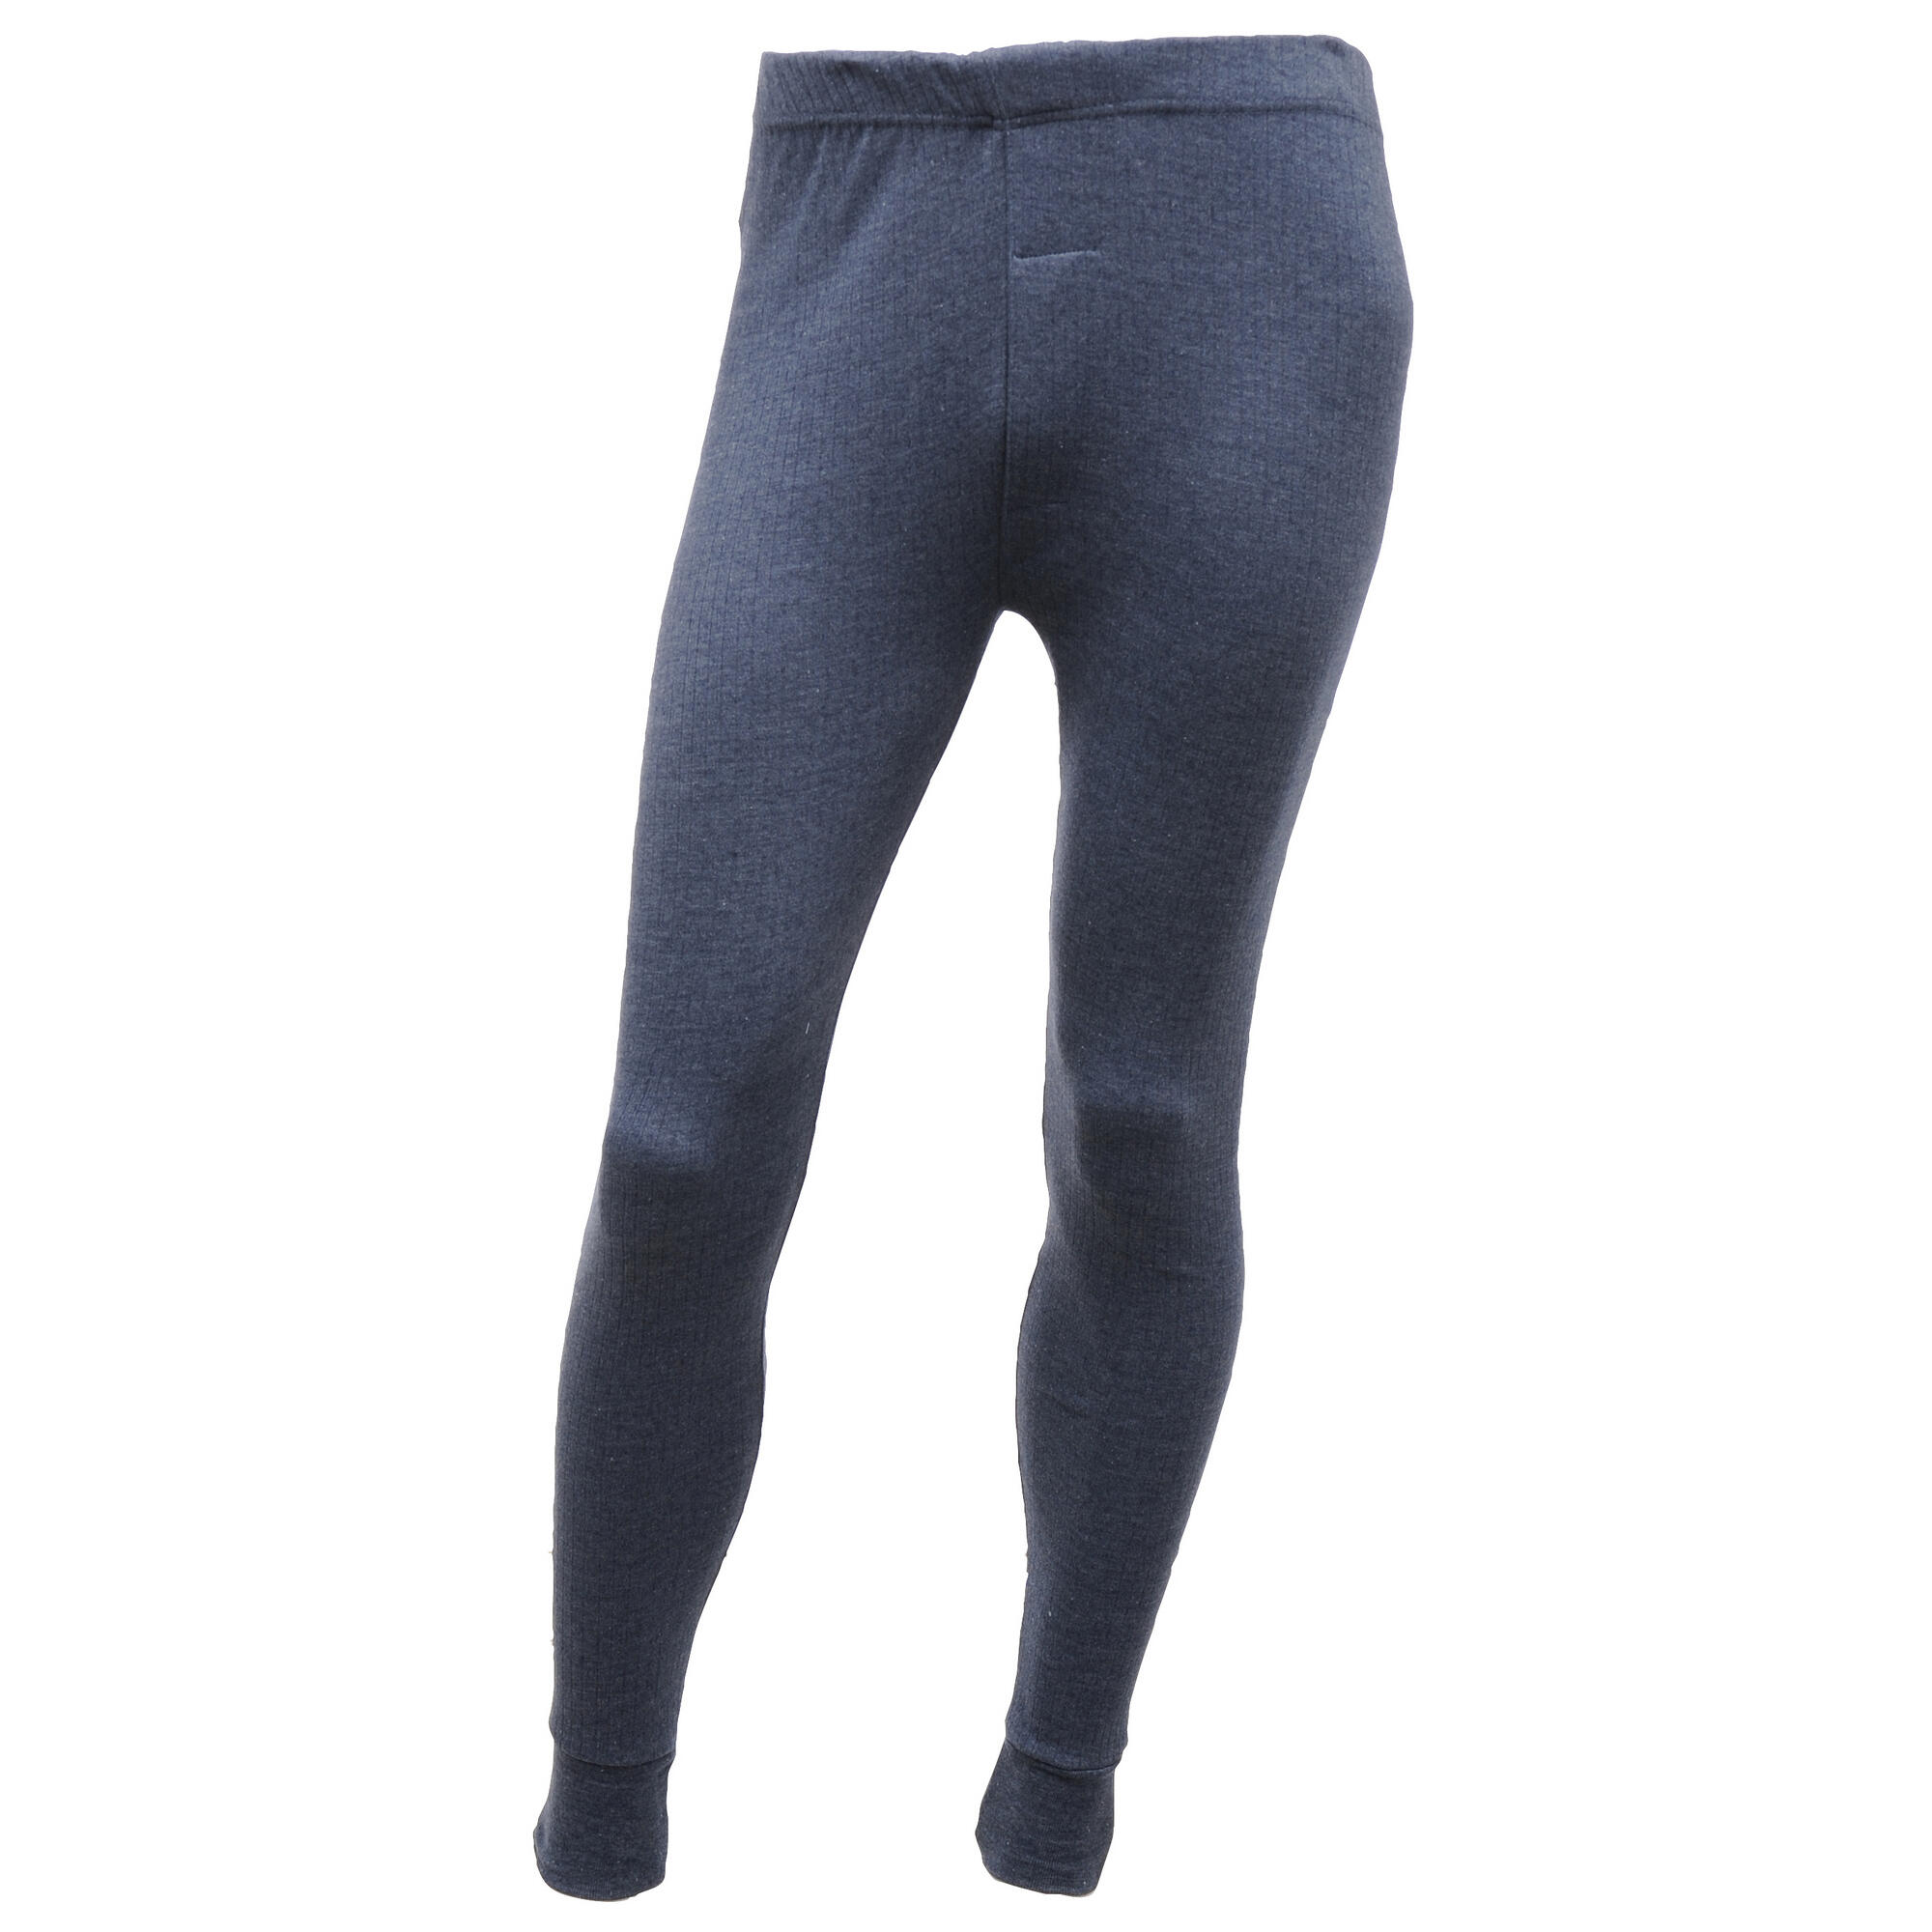 Mens Thermal Underwear Long Johns (Blue) 3/4